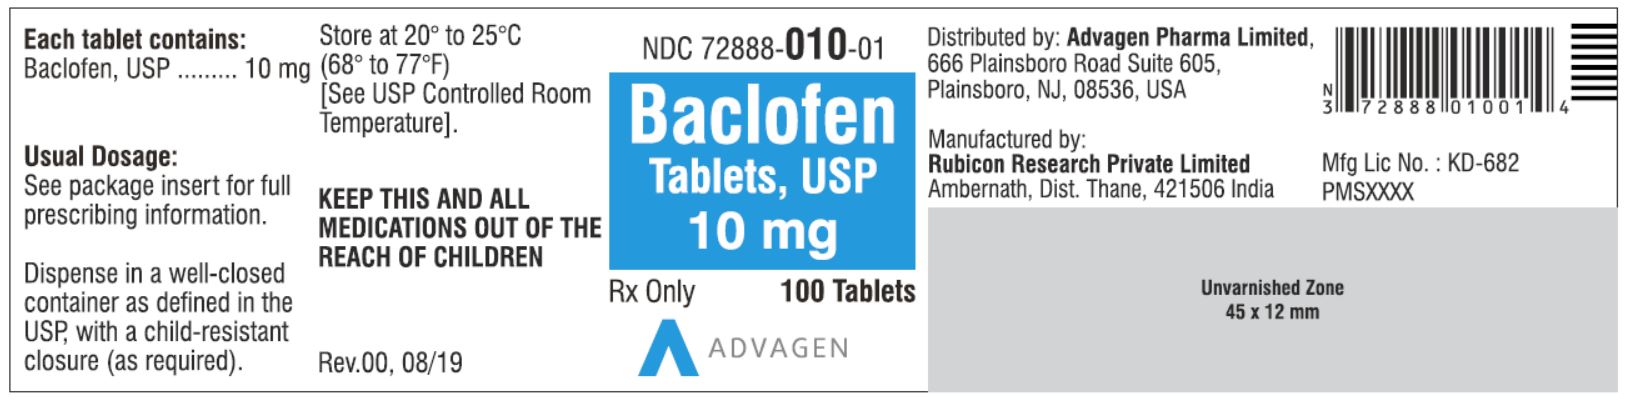 NDC: <a href=/NDC/72888-010-01>72888-010-01</a> - Baclofen Tablets, USP 10 mg - 100 Tablets